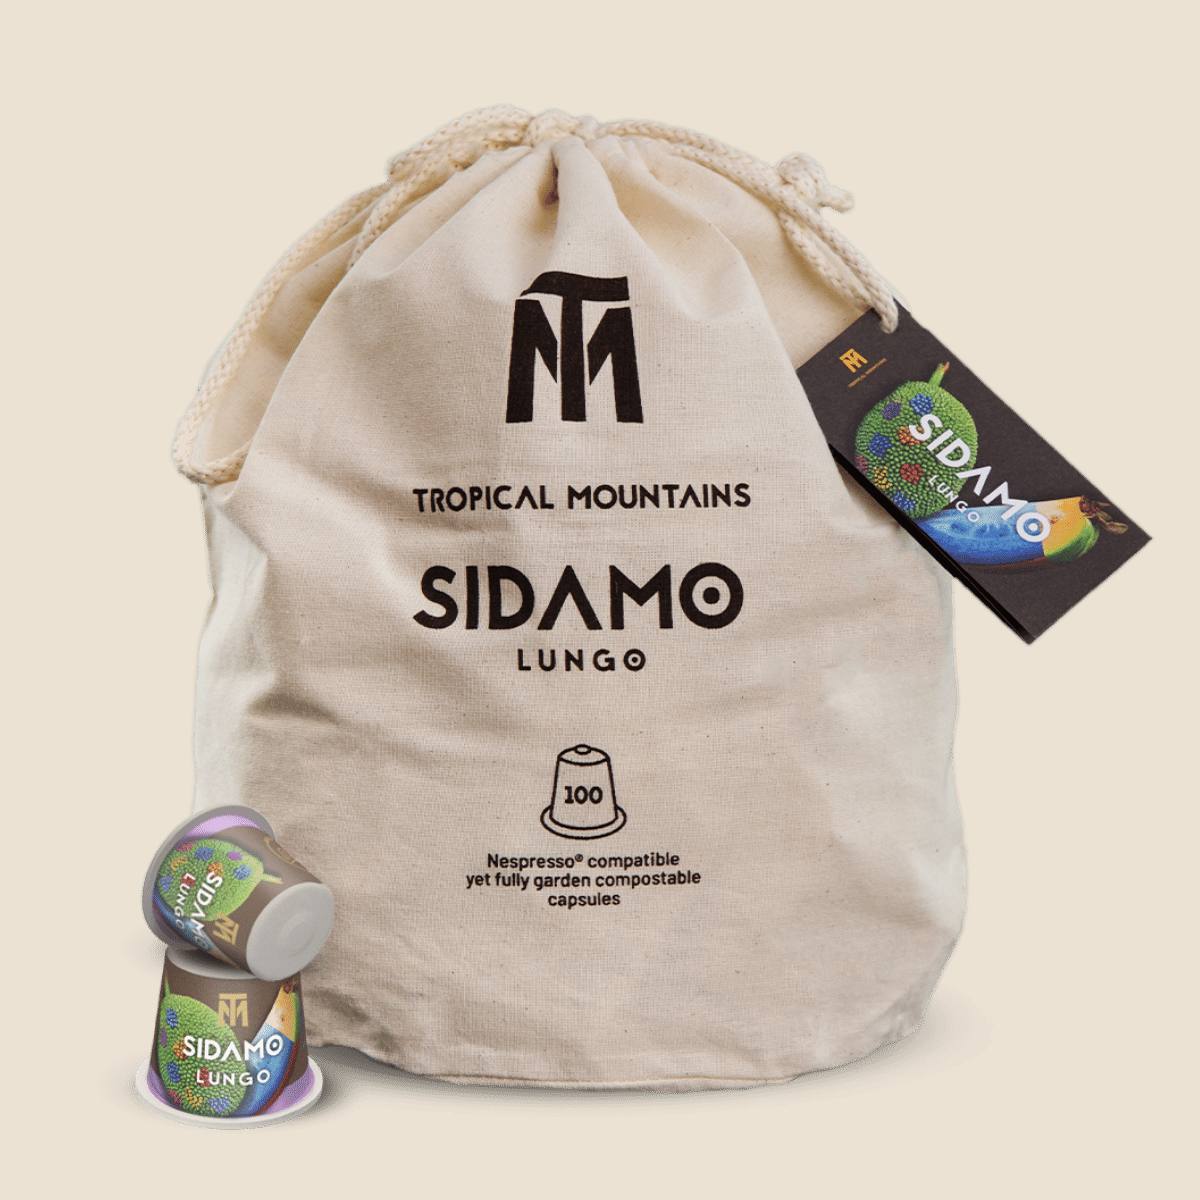 SIDAMO Lungo Organic Fair Trade Coffee Capsules refill bag